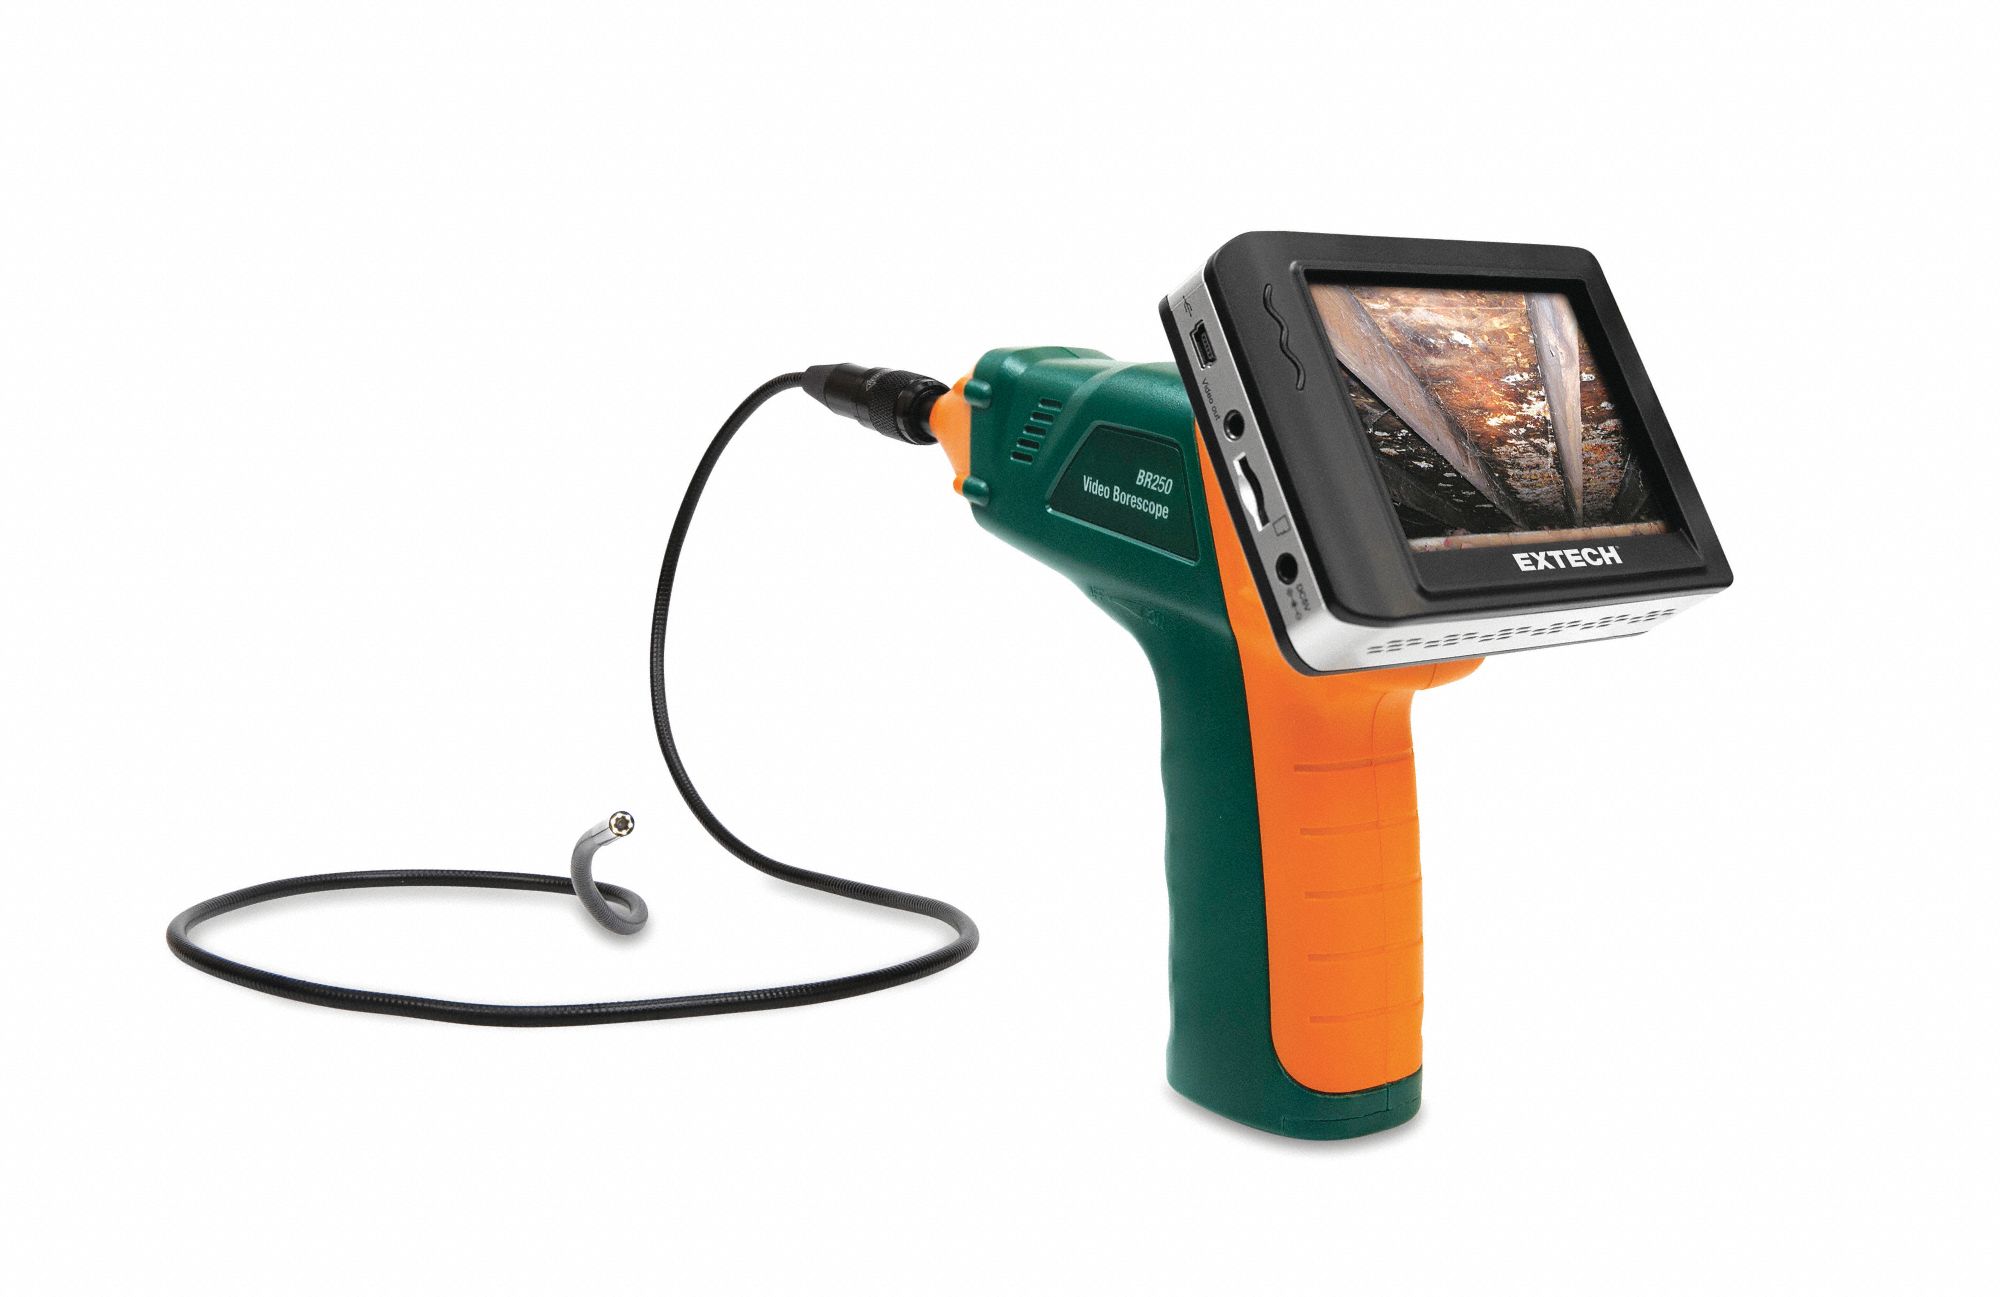 Steelman Pro Video Inspection Digital Borescope 8.5mm Diameter Ca SVS-240 